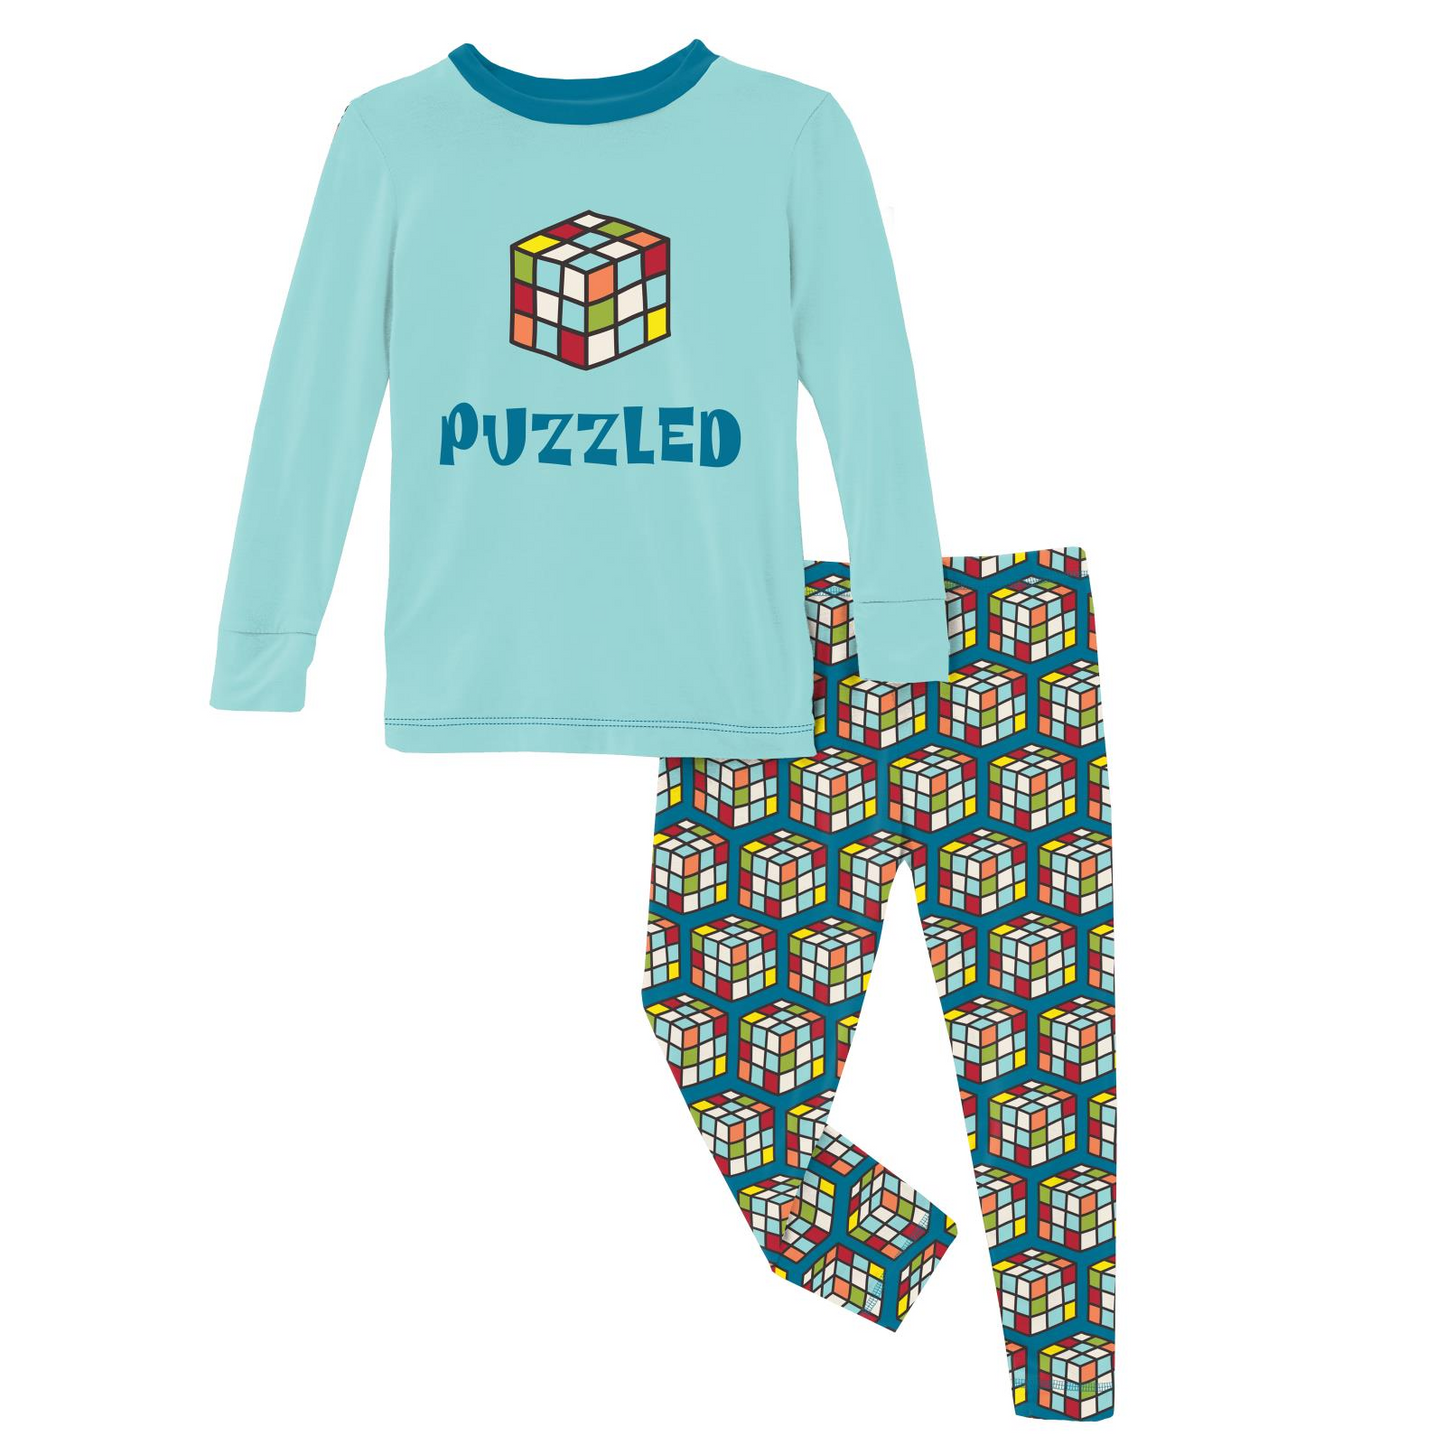 Kickee Pants - Long Sleeve Graphic Tee Pajama Set Cerulean Blue Puzzle Cube